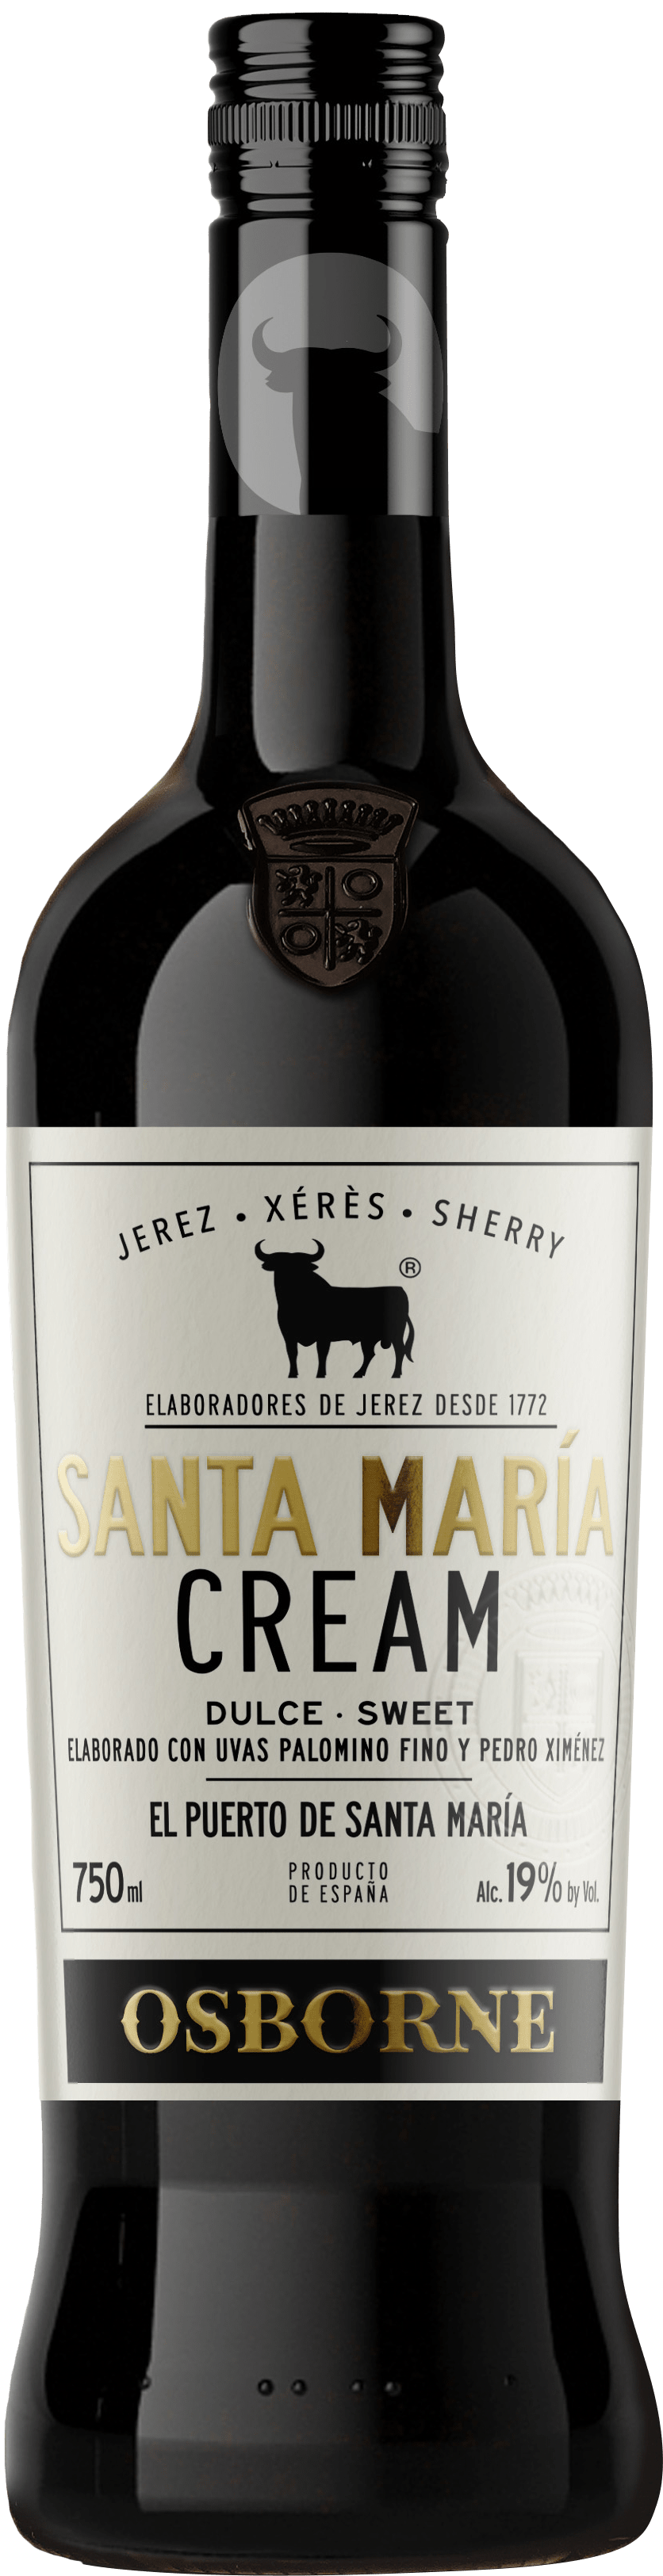 Osborne Sherry Santa María Cream